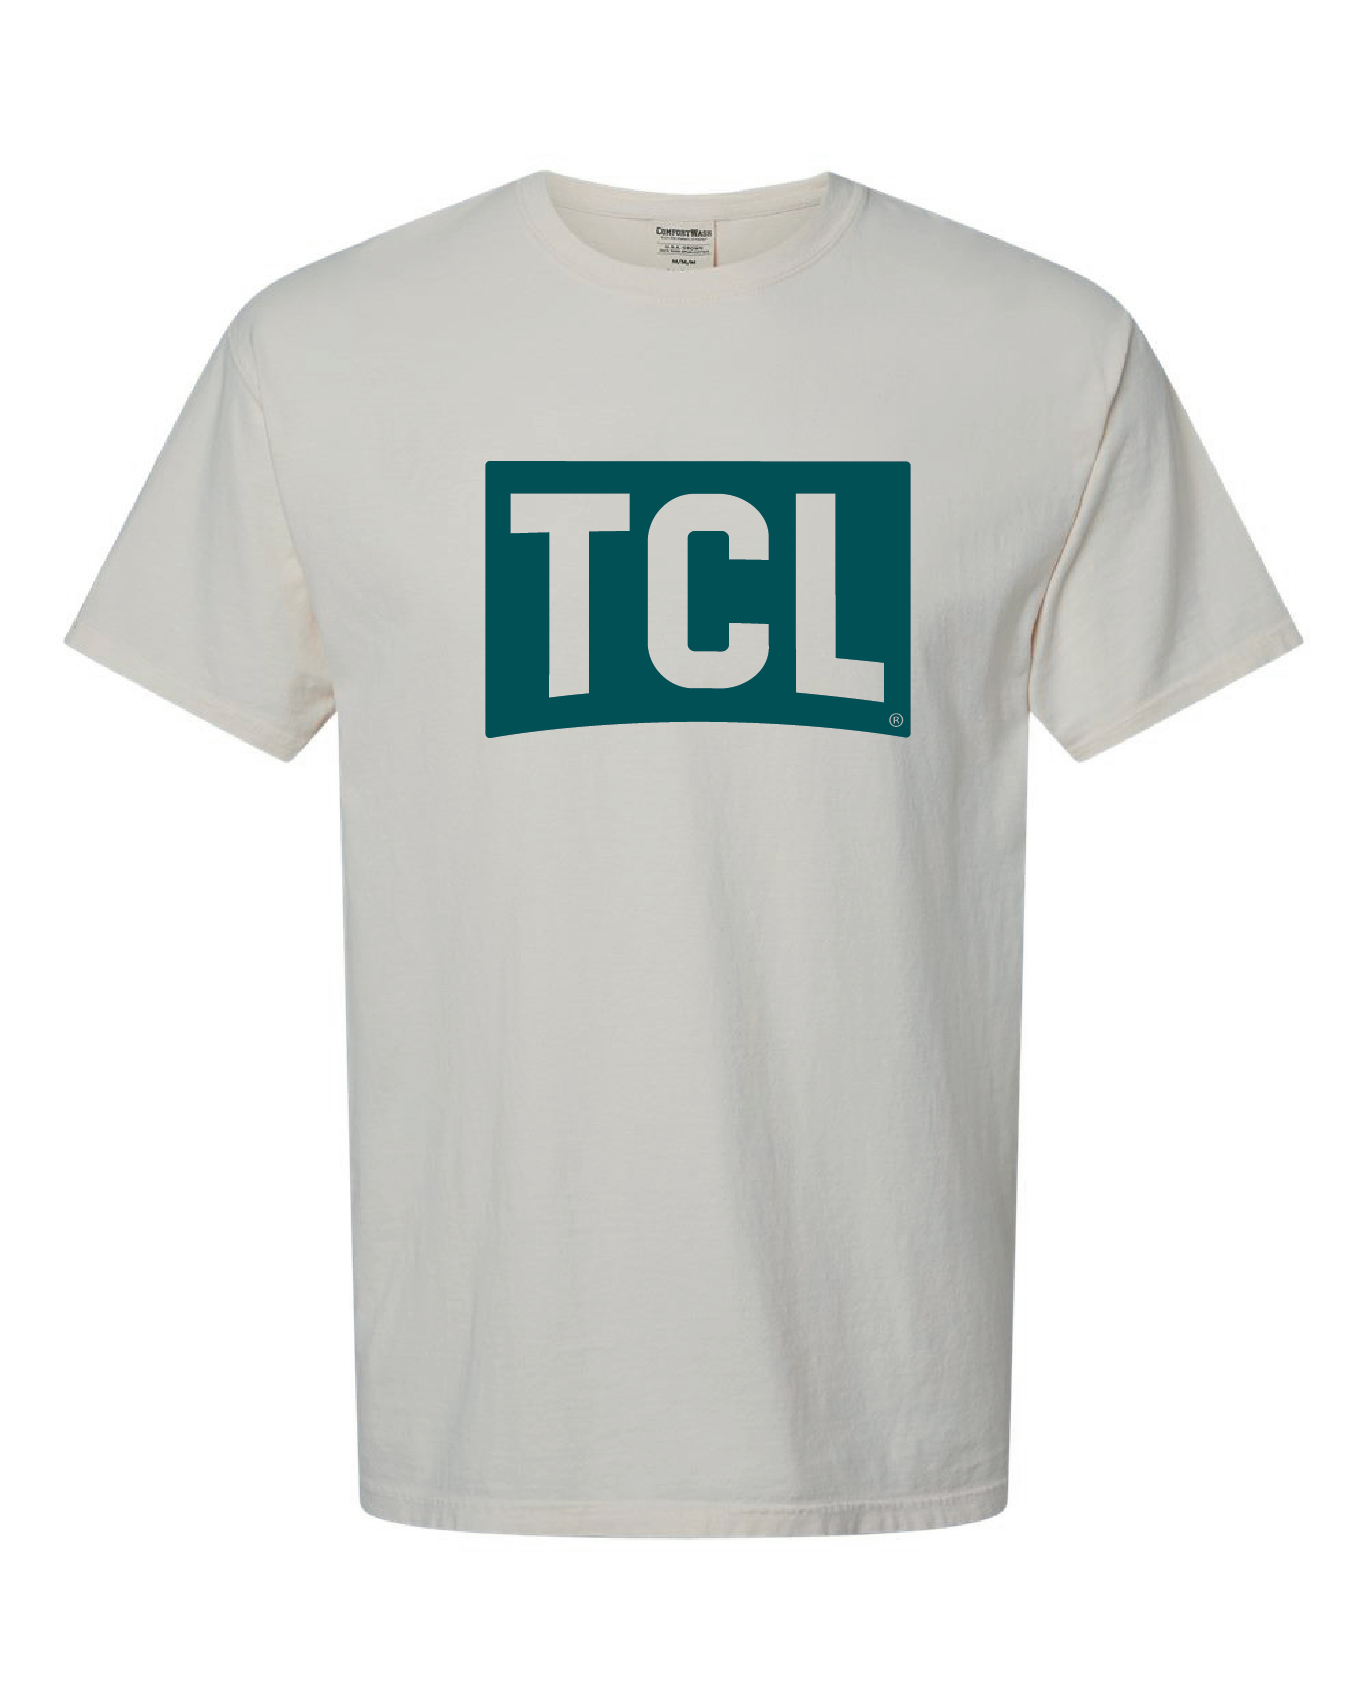 Visit Tuscaloosa: Short Sleeve TEAL TCL Tee